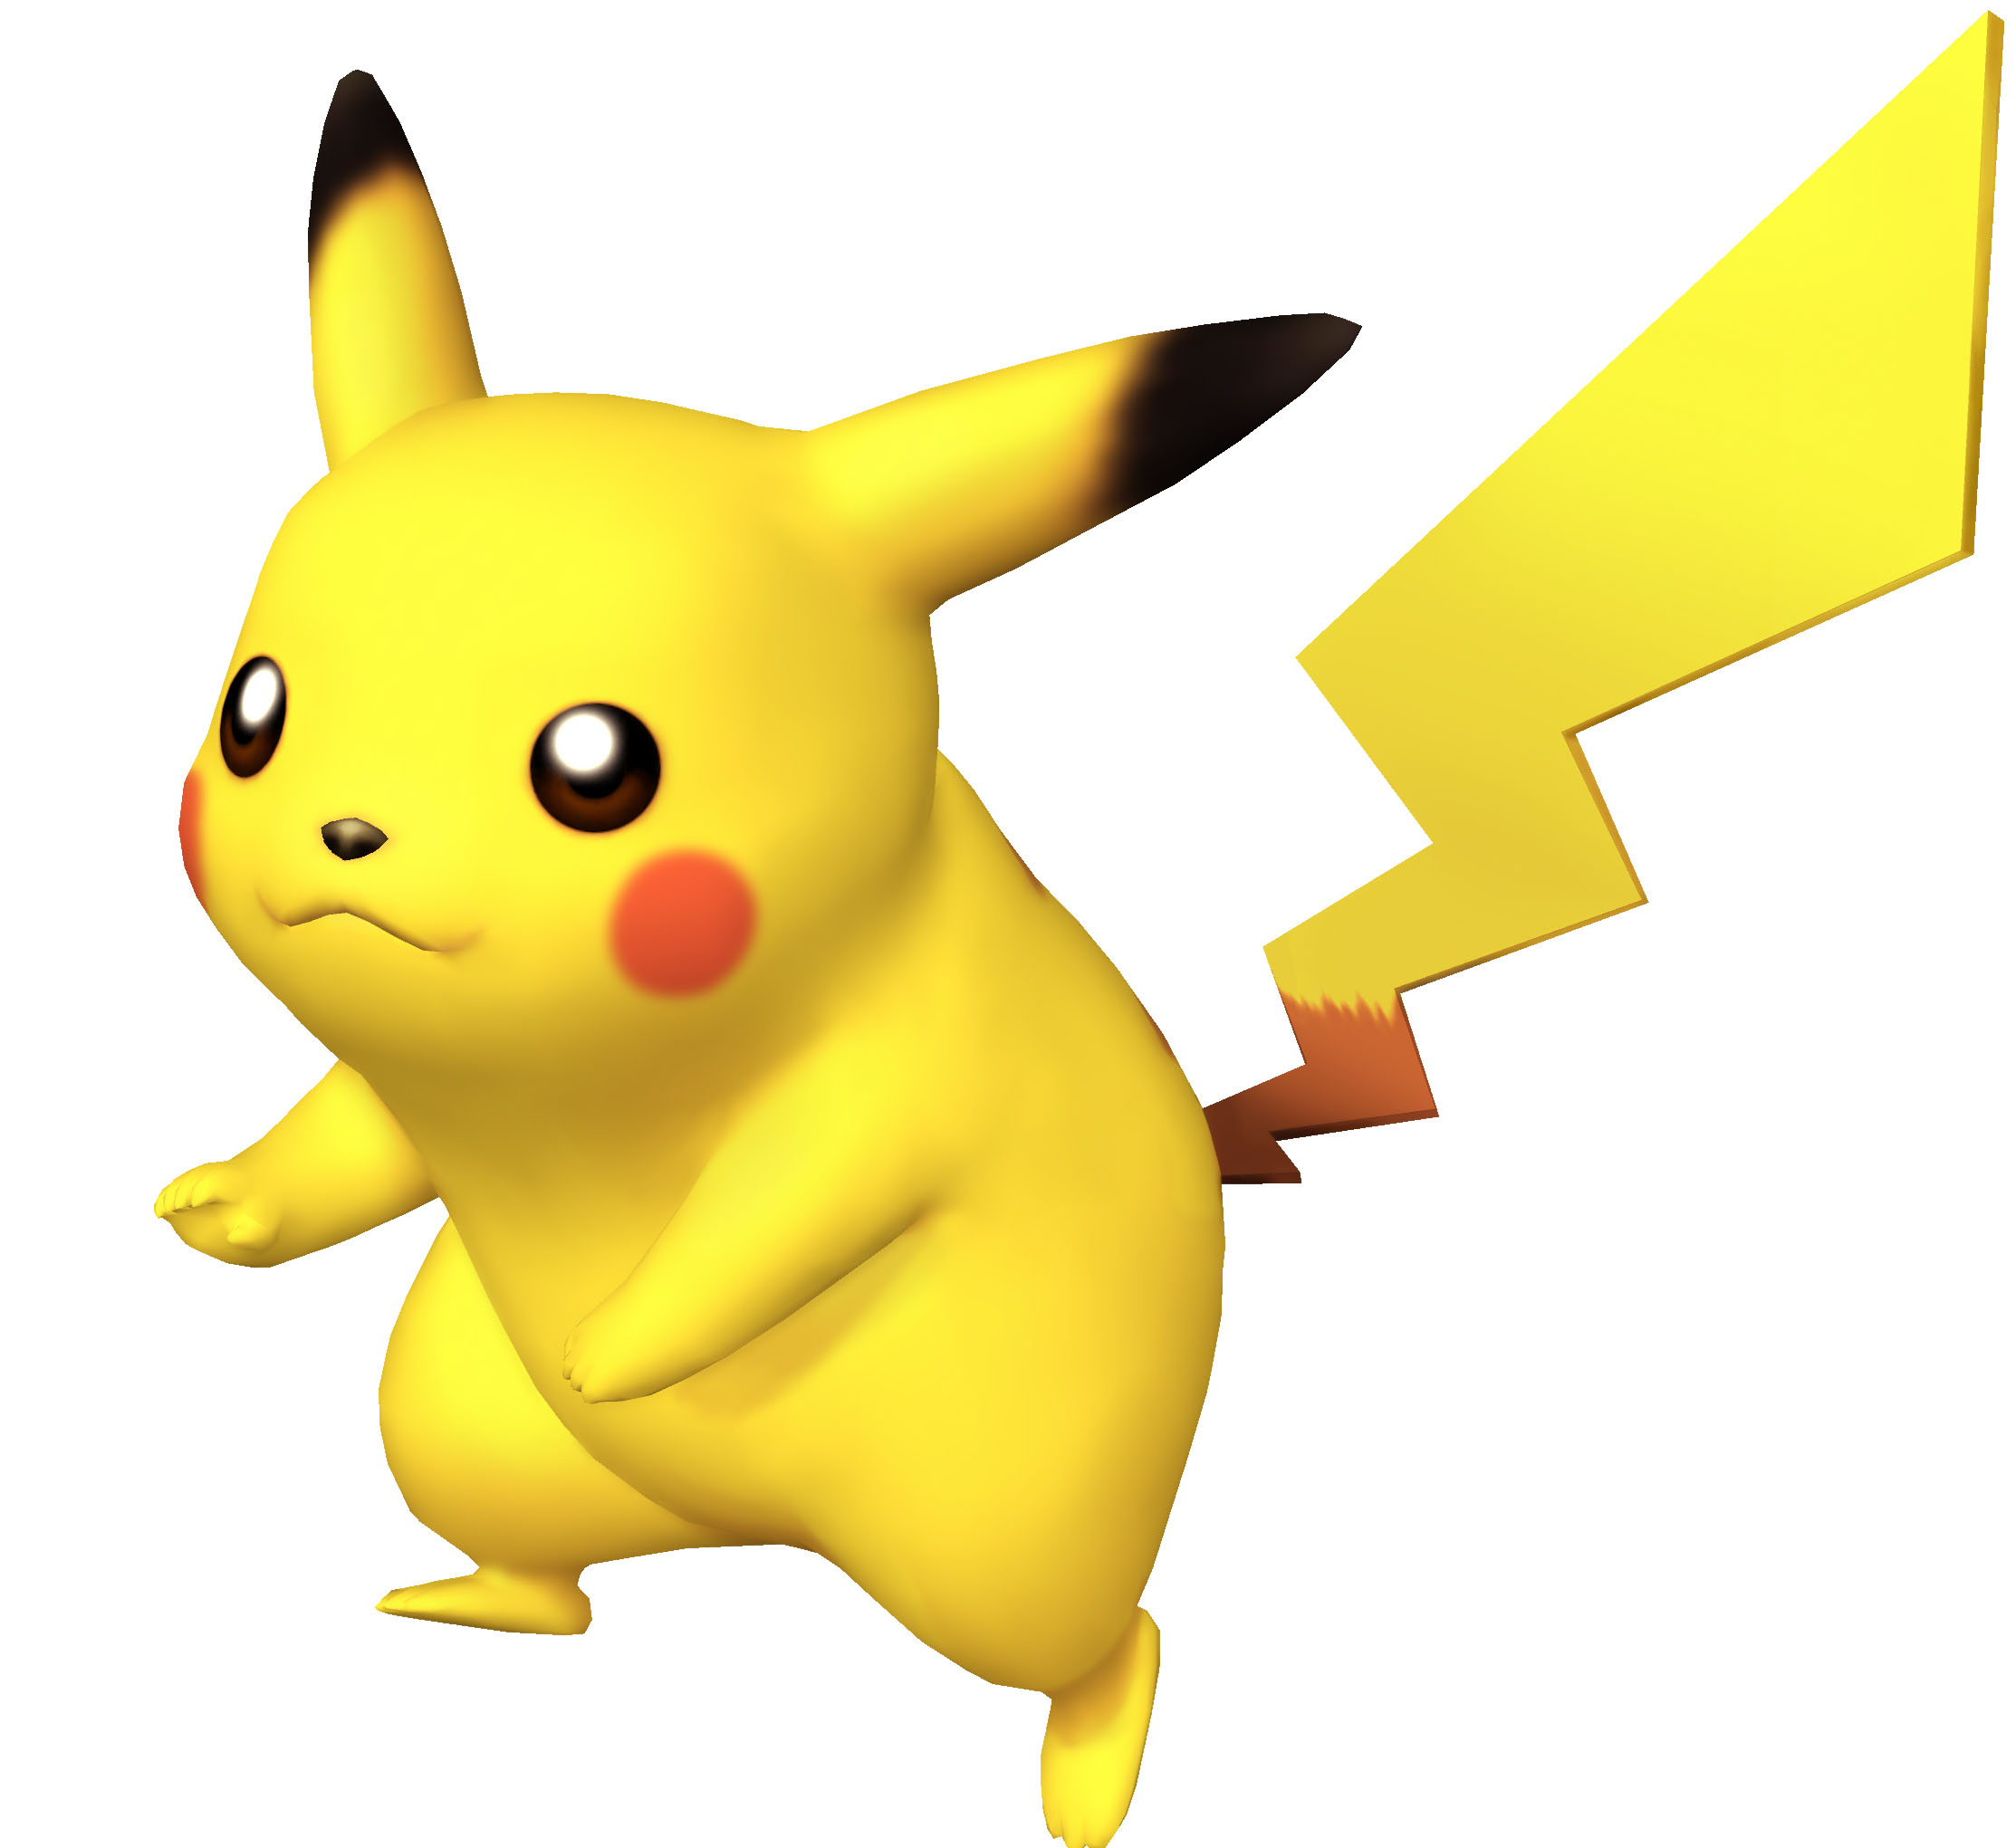 Pikachu the popular Pokemon |